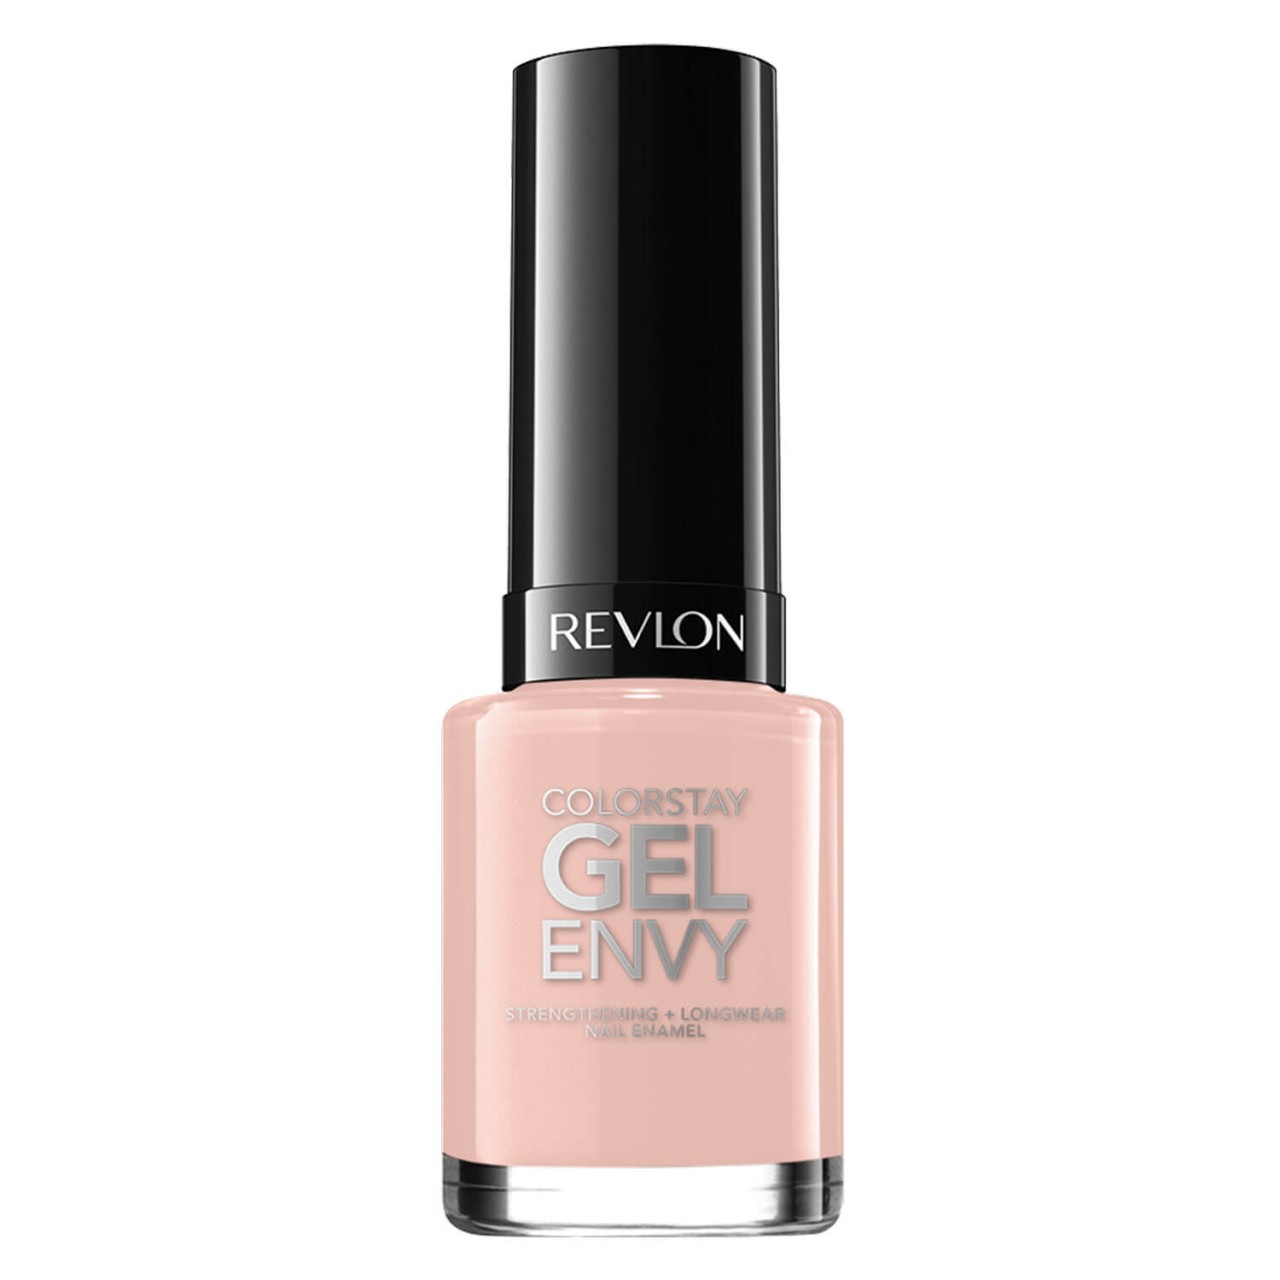 ColorStay Gel Envy Perfect Pair von REVLON Cosmetics